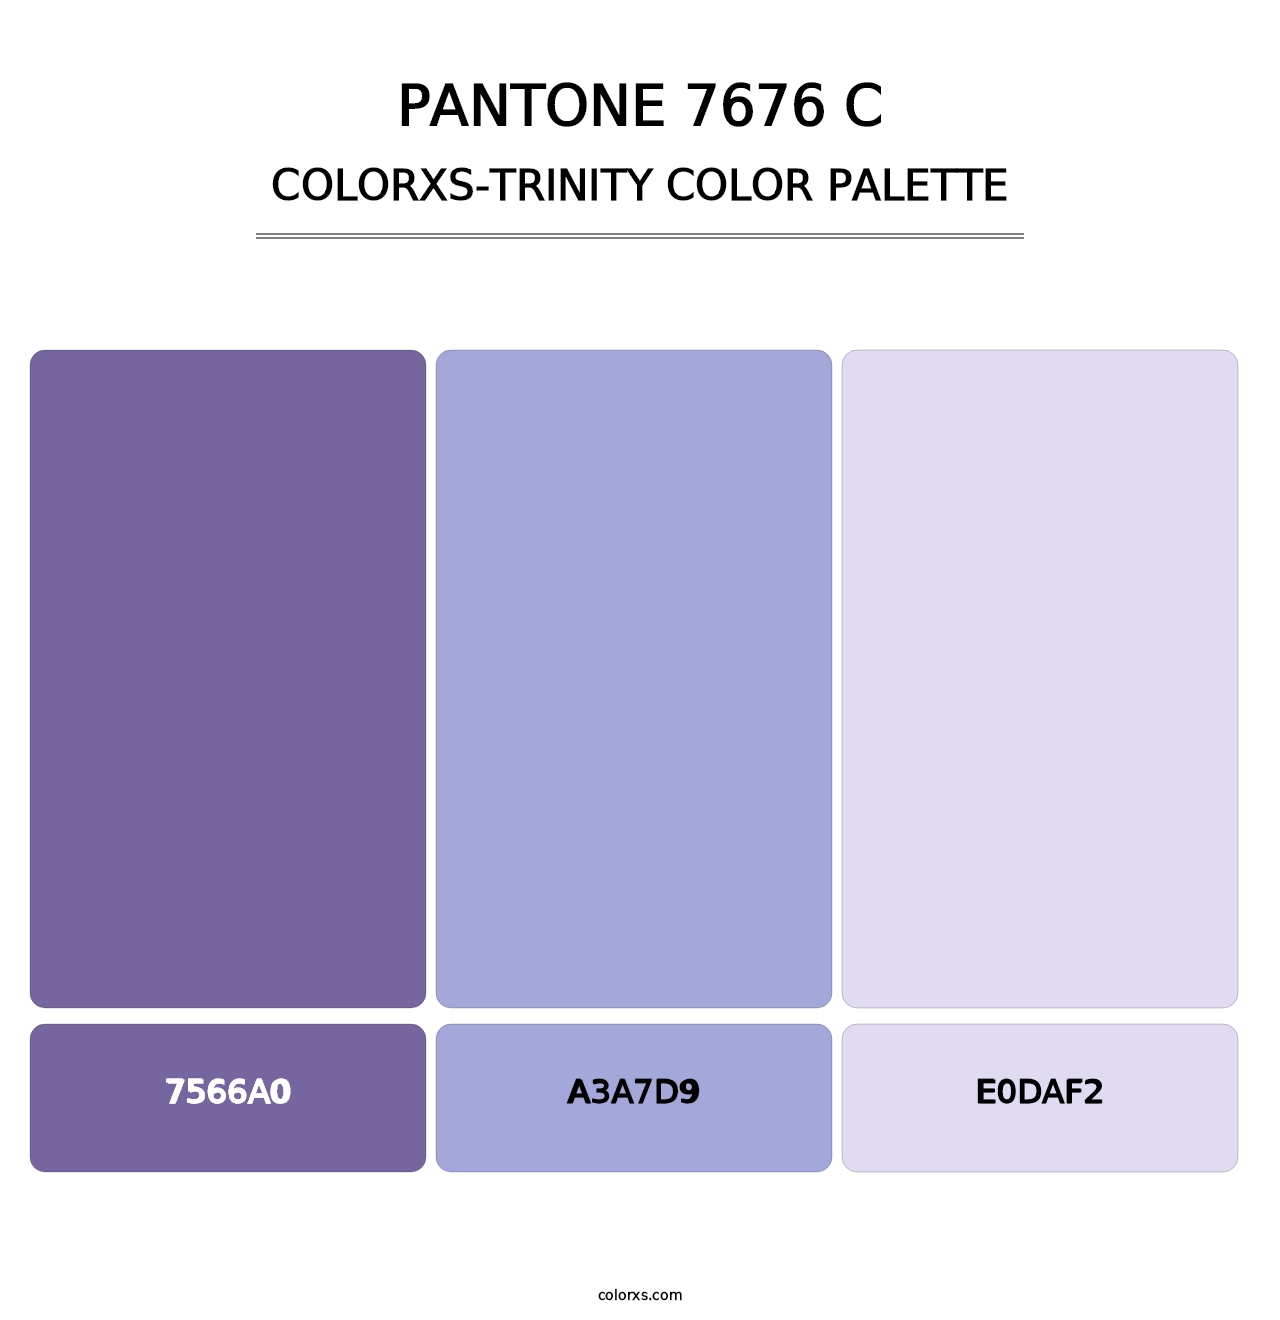 PANTONE 7676 C - Colorxs Trinity Palette